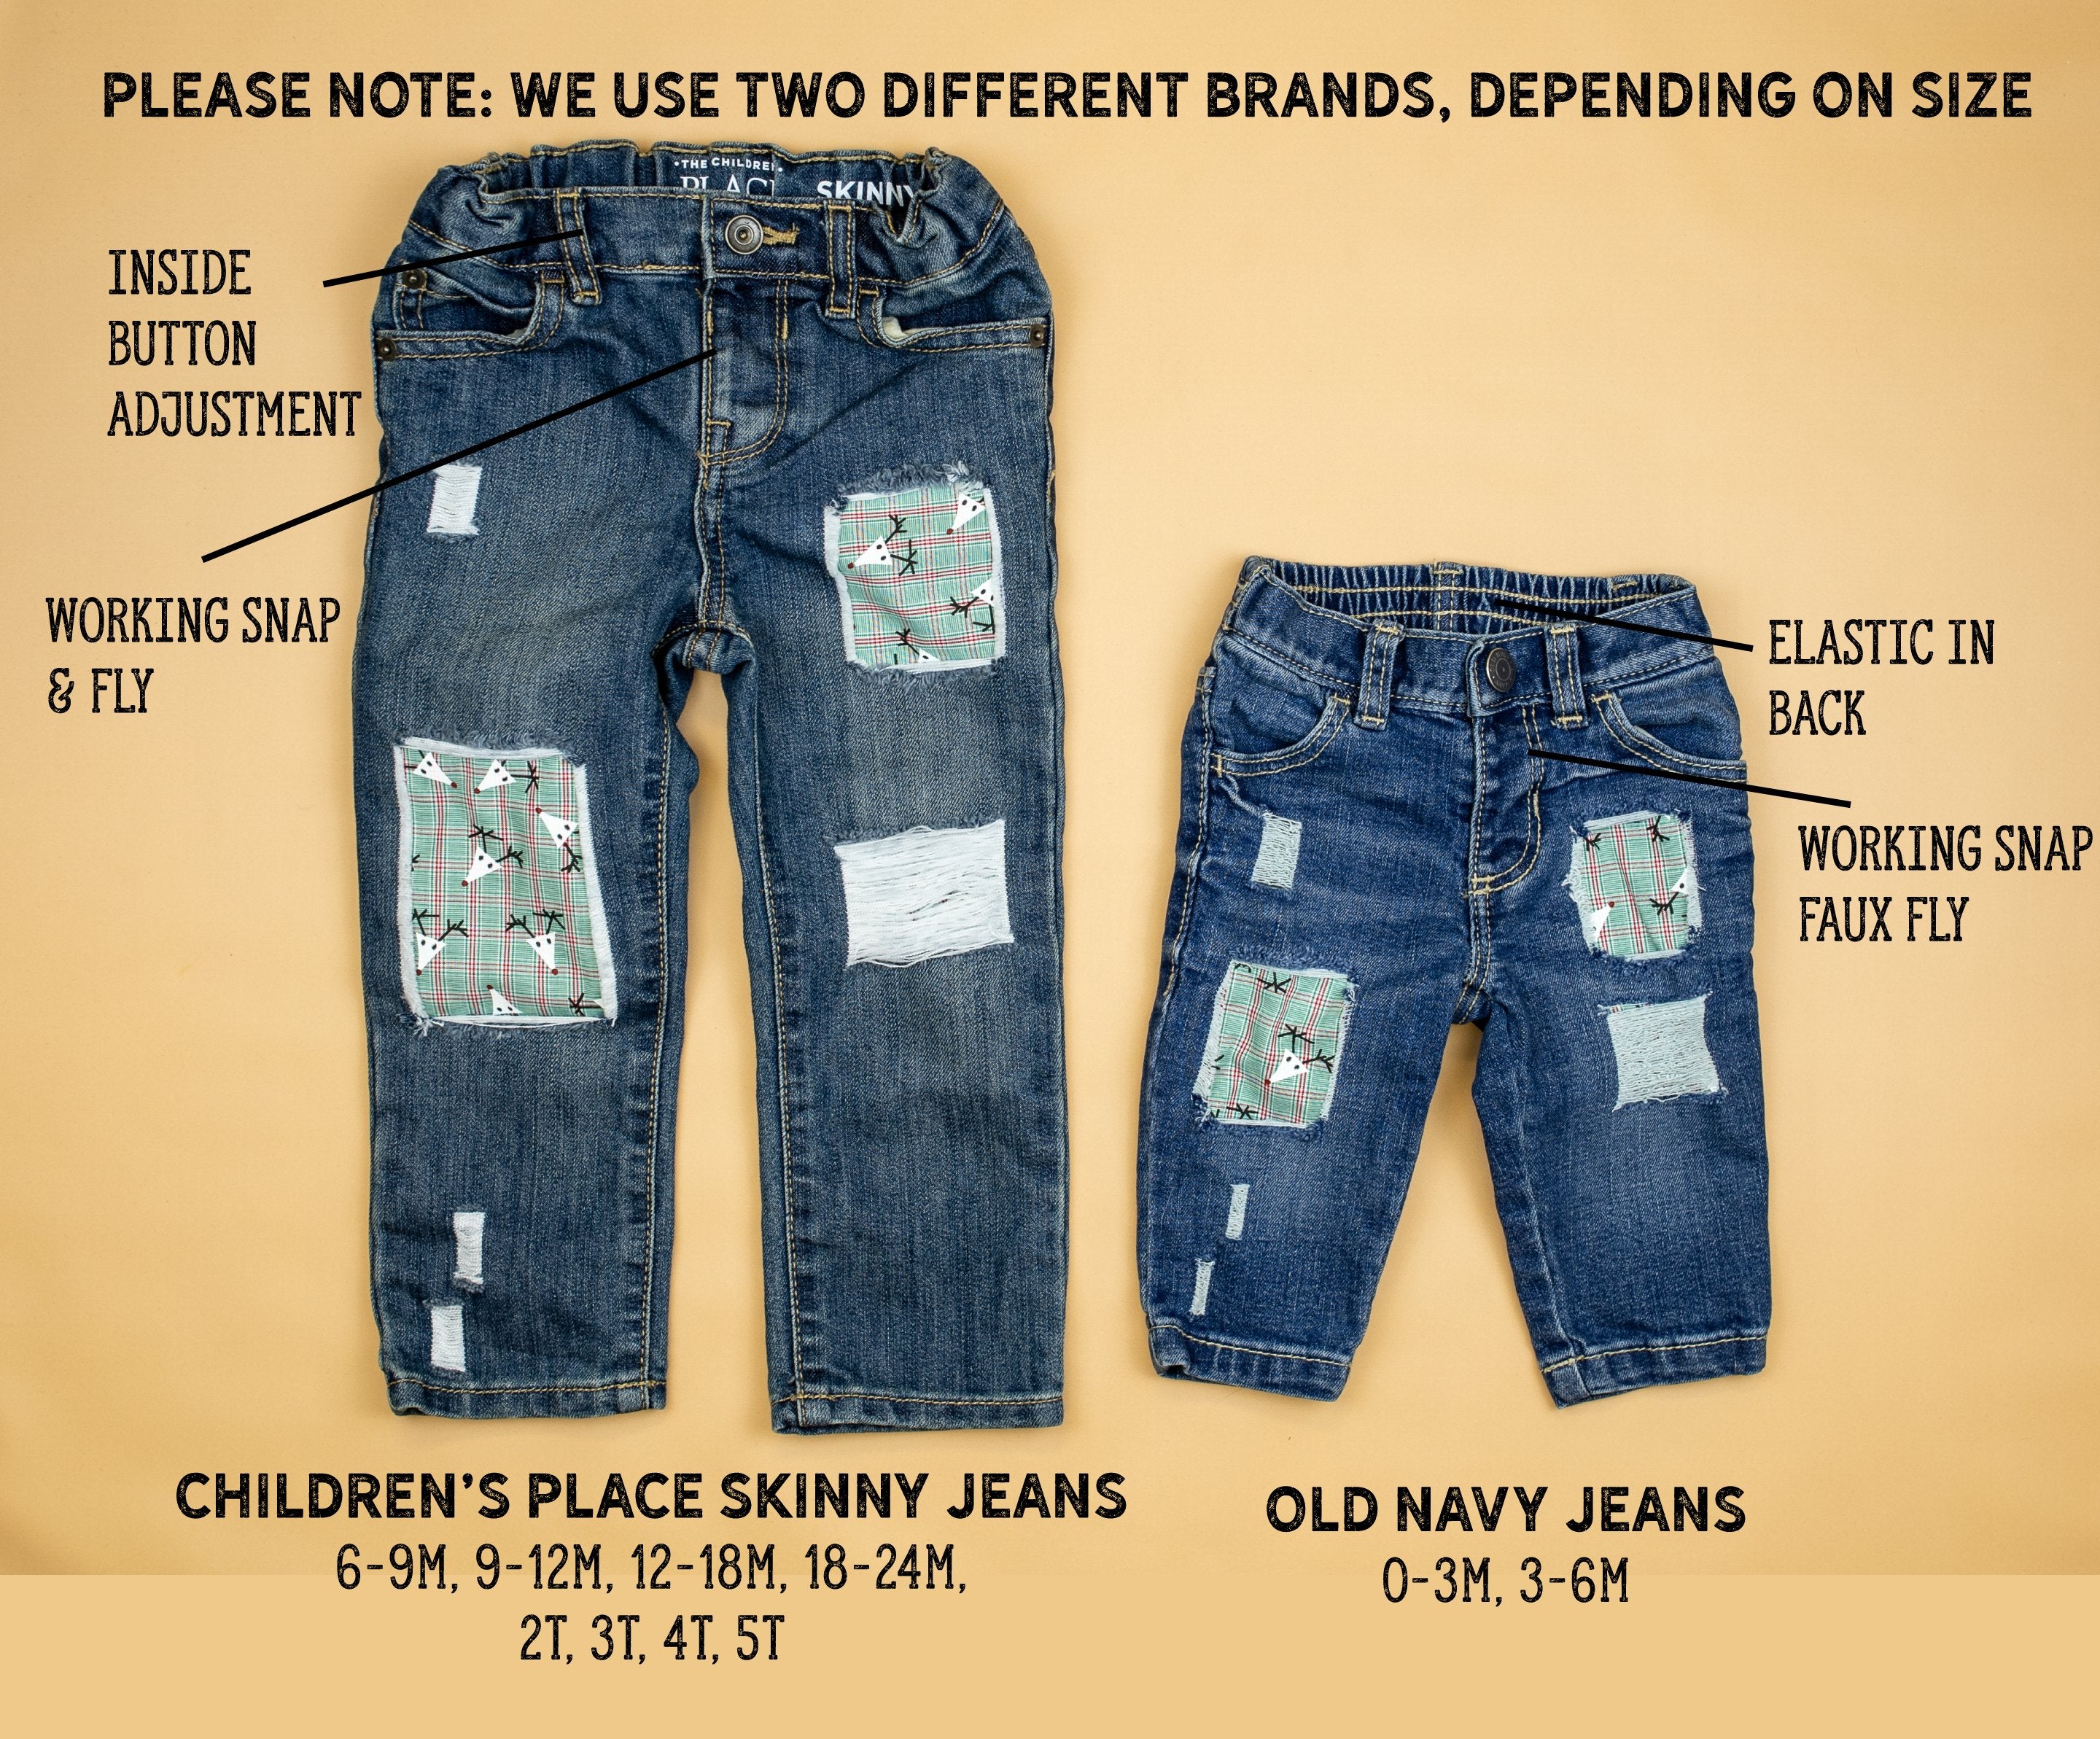 Ripped Jeans – STREET NINE FASHIONS